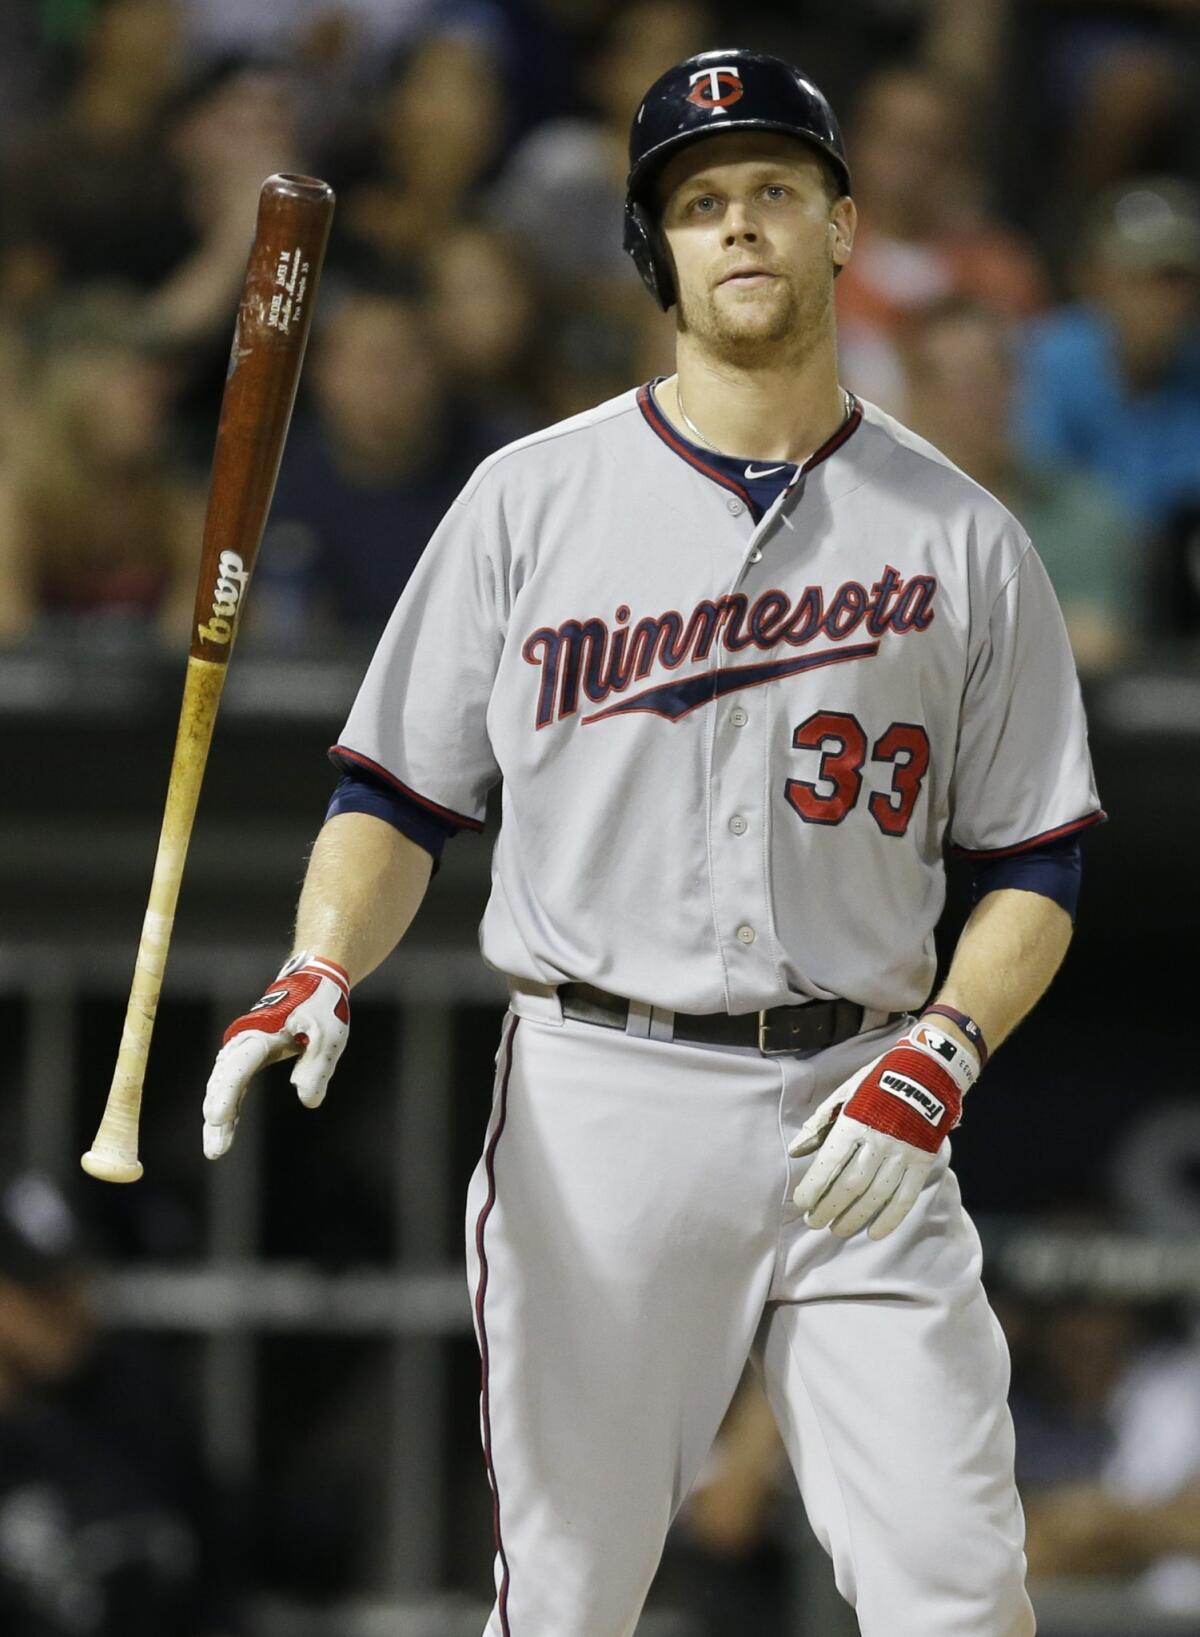 The Minnesota Twins placed veteran first baseman Justin Morneau on waivers Tuesday.